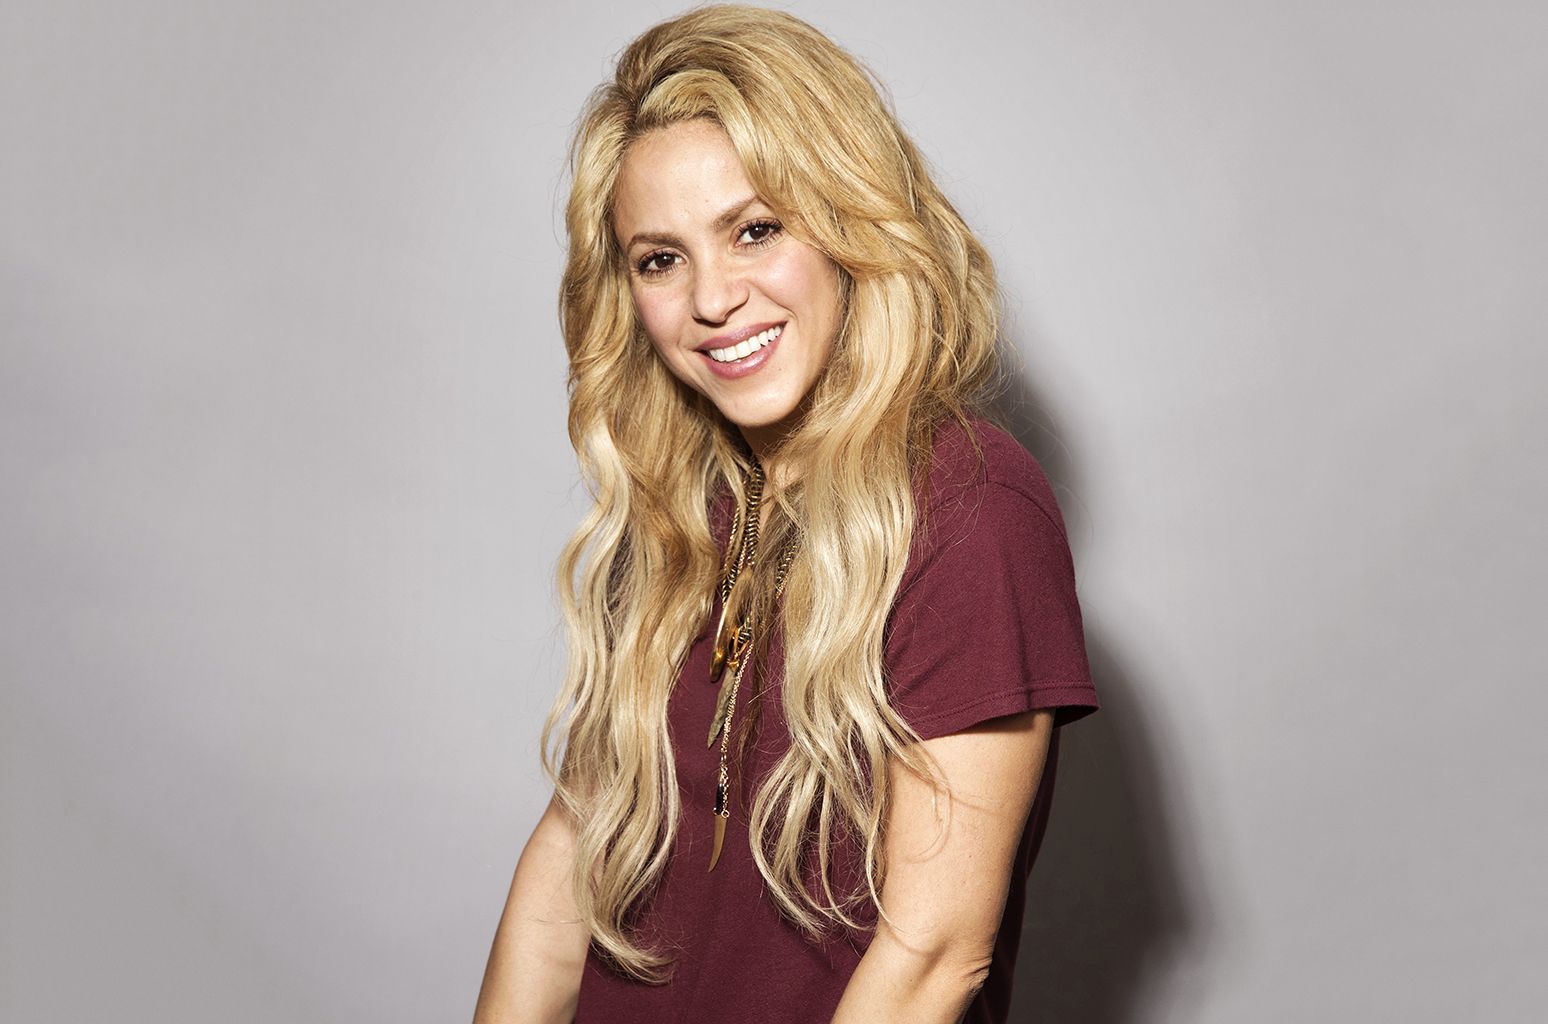 Shakira Me Gusta 4K Wallpapers